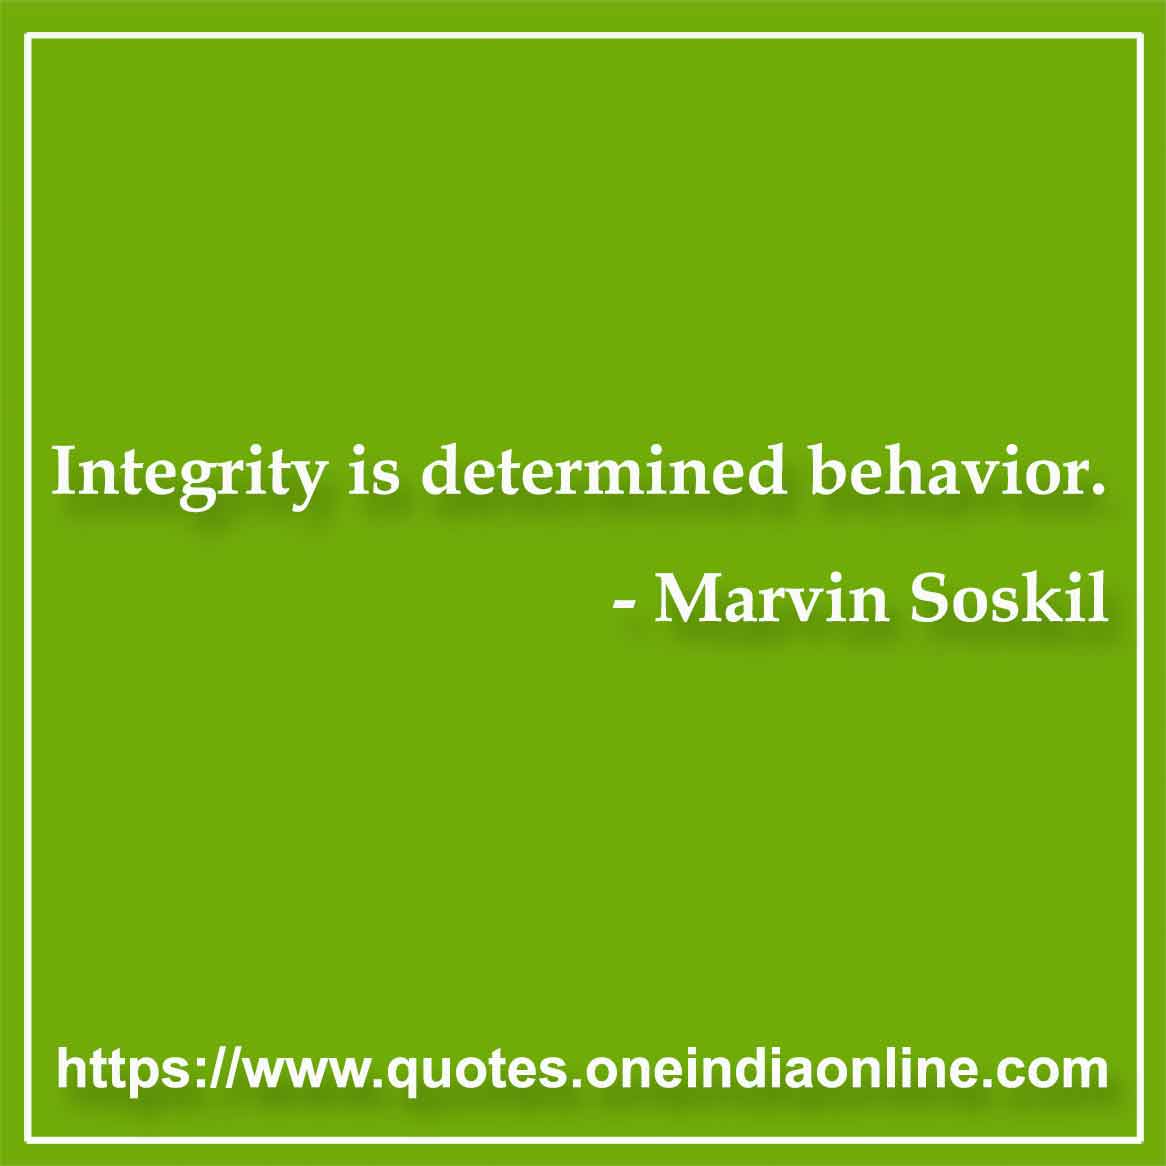 Integrity is determined behavior. 

Marvin Soskil